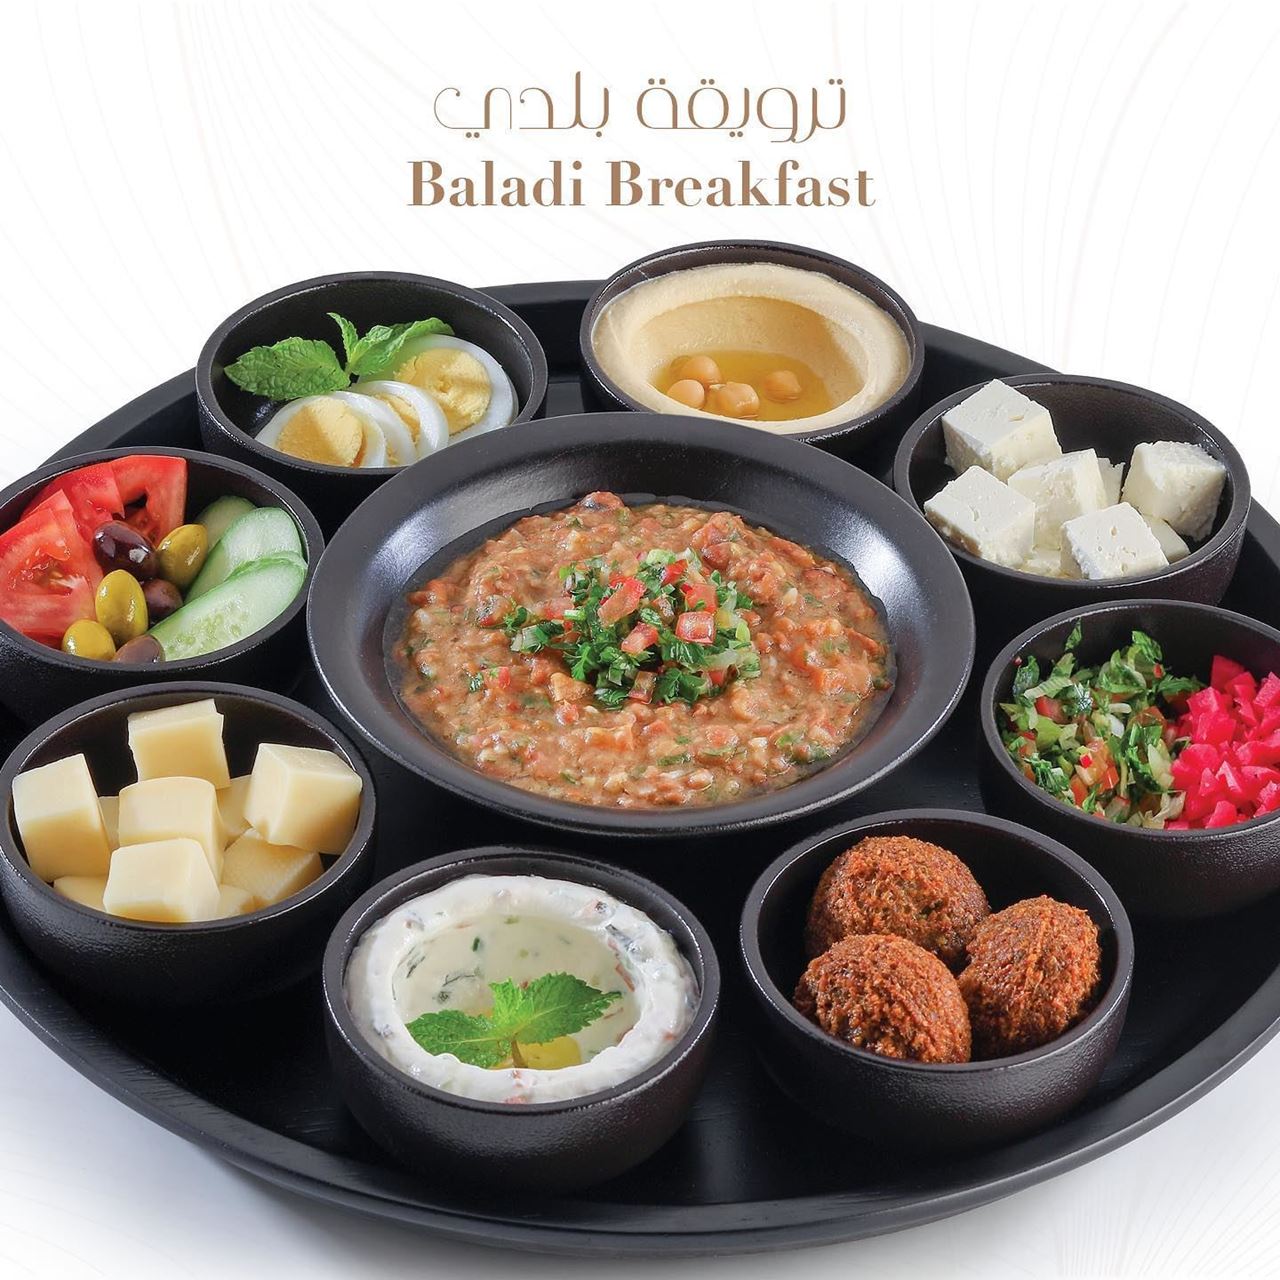 Breakfast is back at Mais Al Ghanim Restaurant